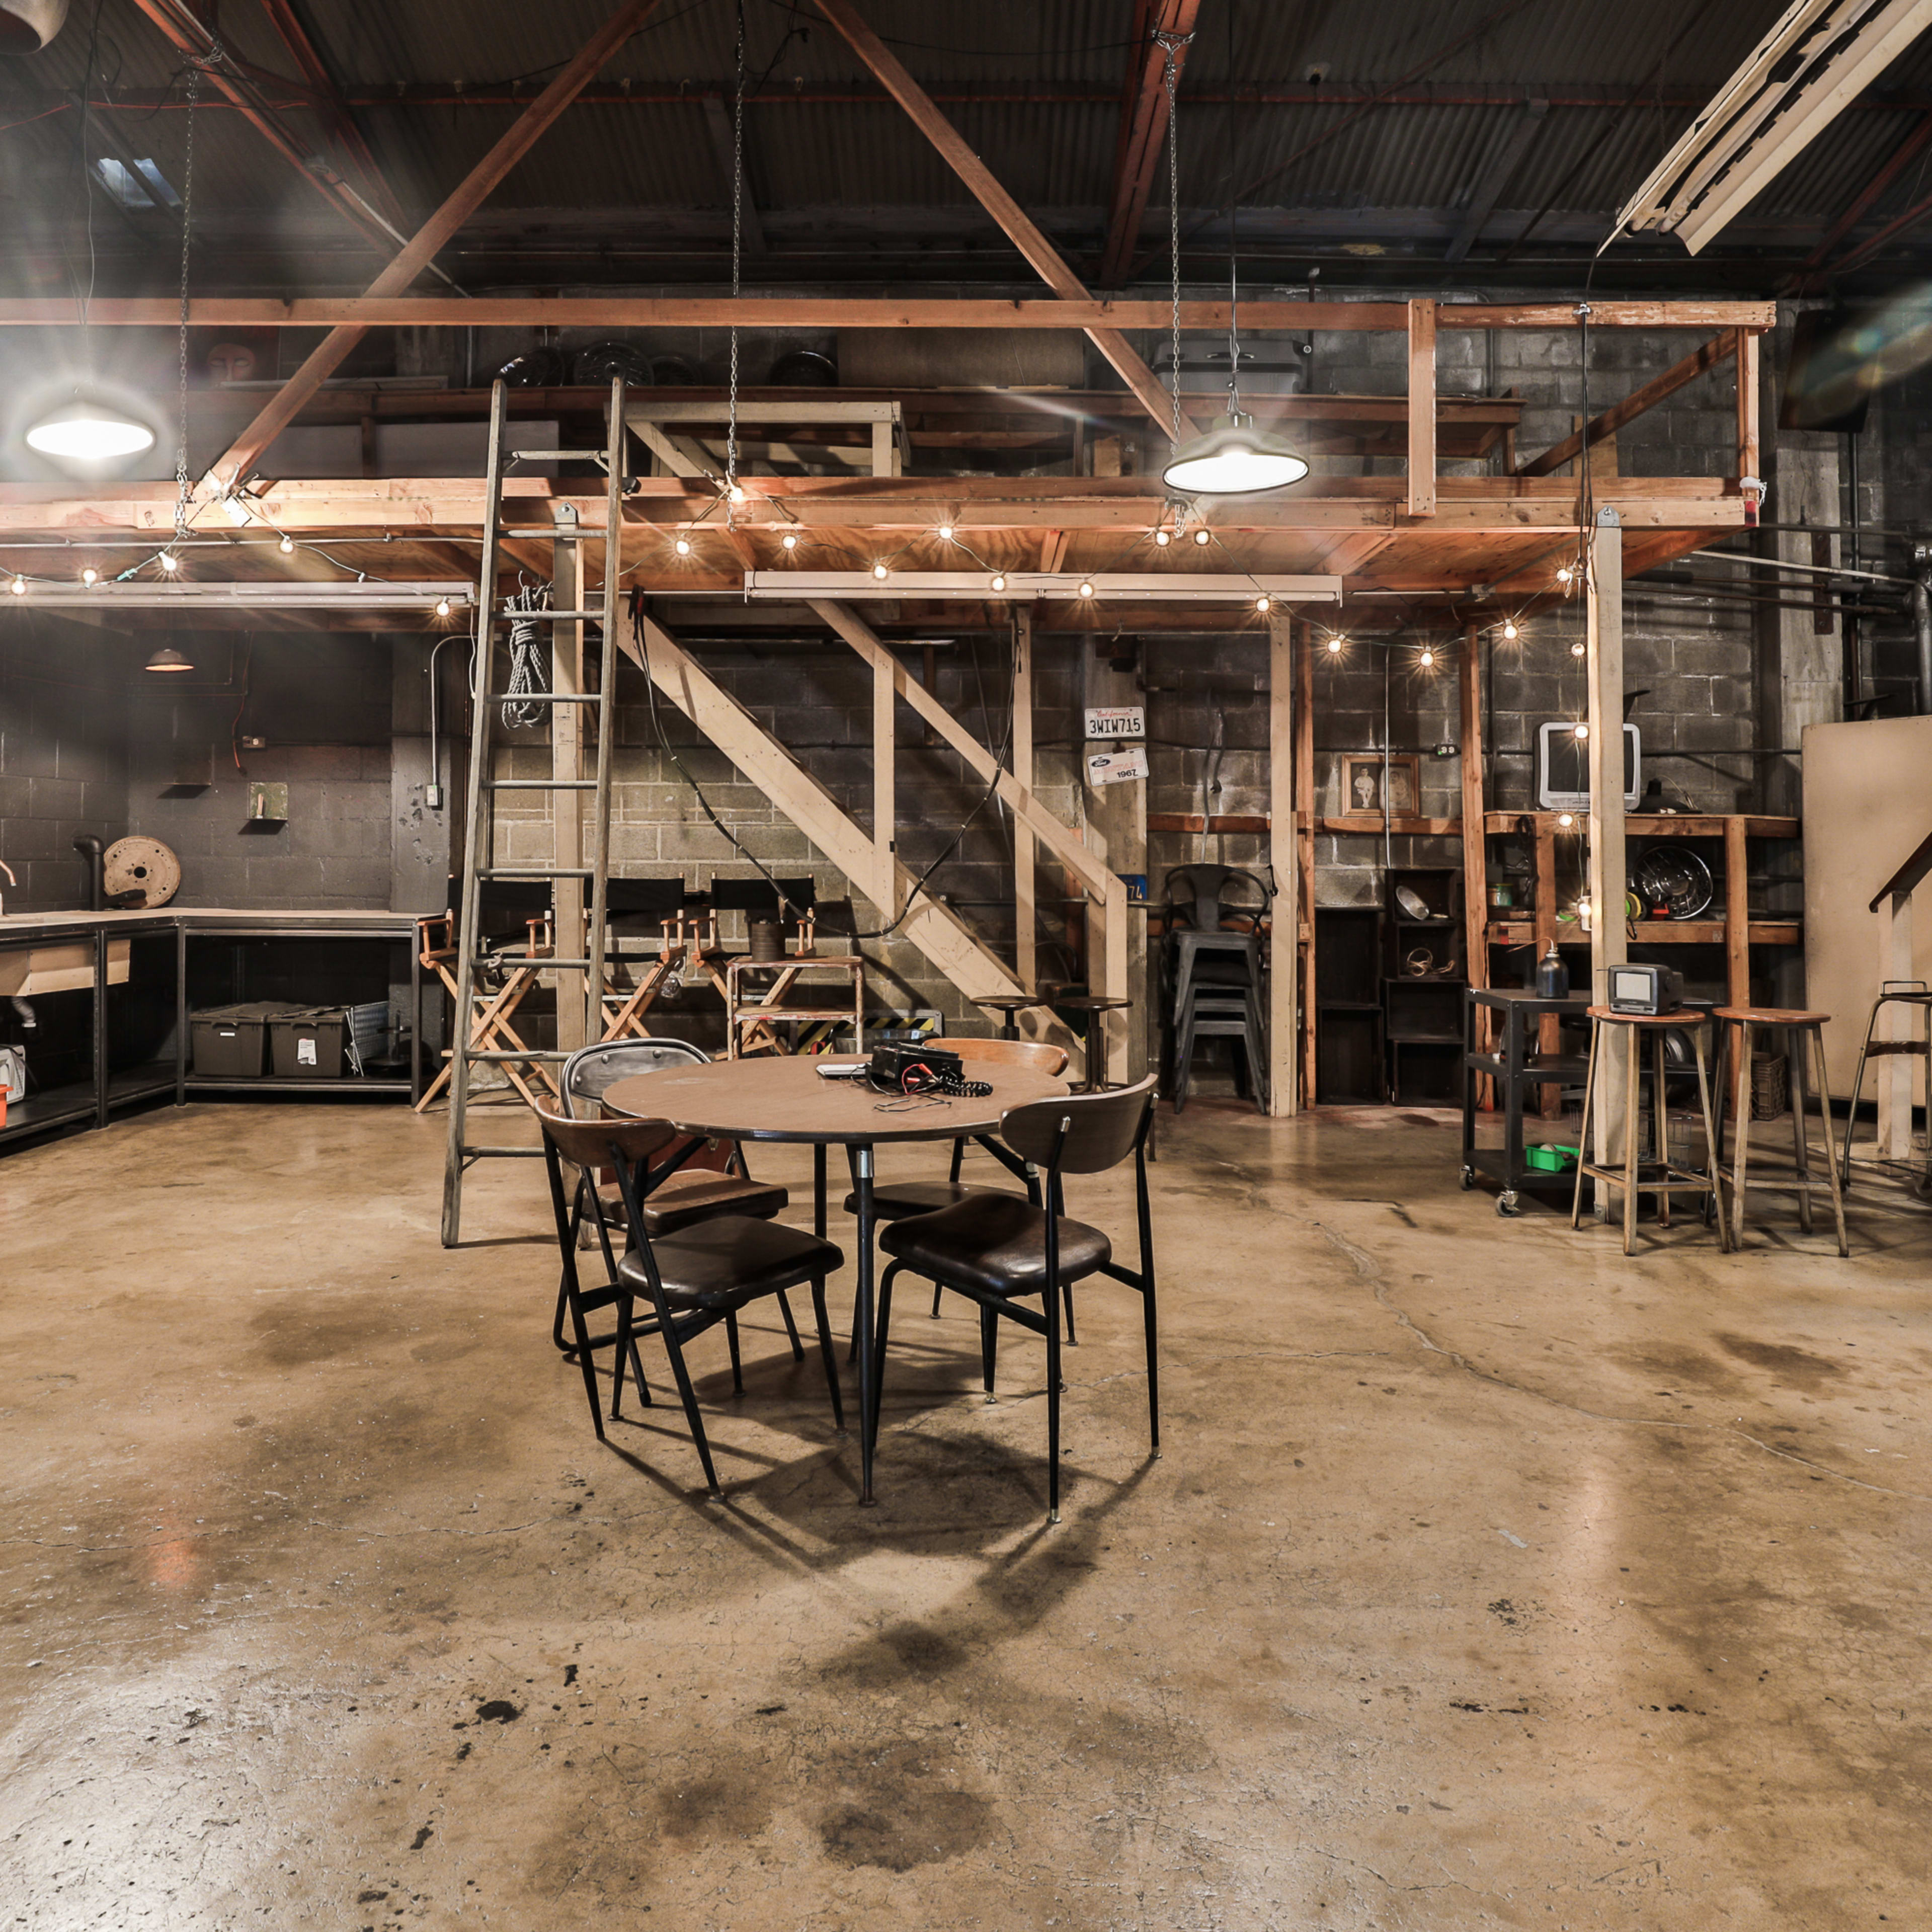 Brooklyn Rental Studio in Industrial Loft - Studio 510, Brooklyn, NY, Production